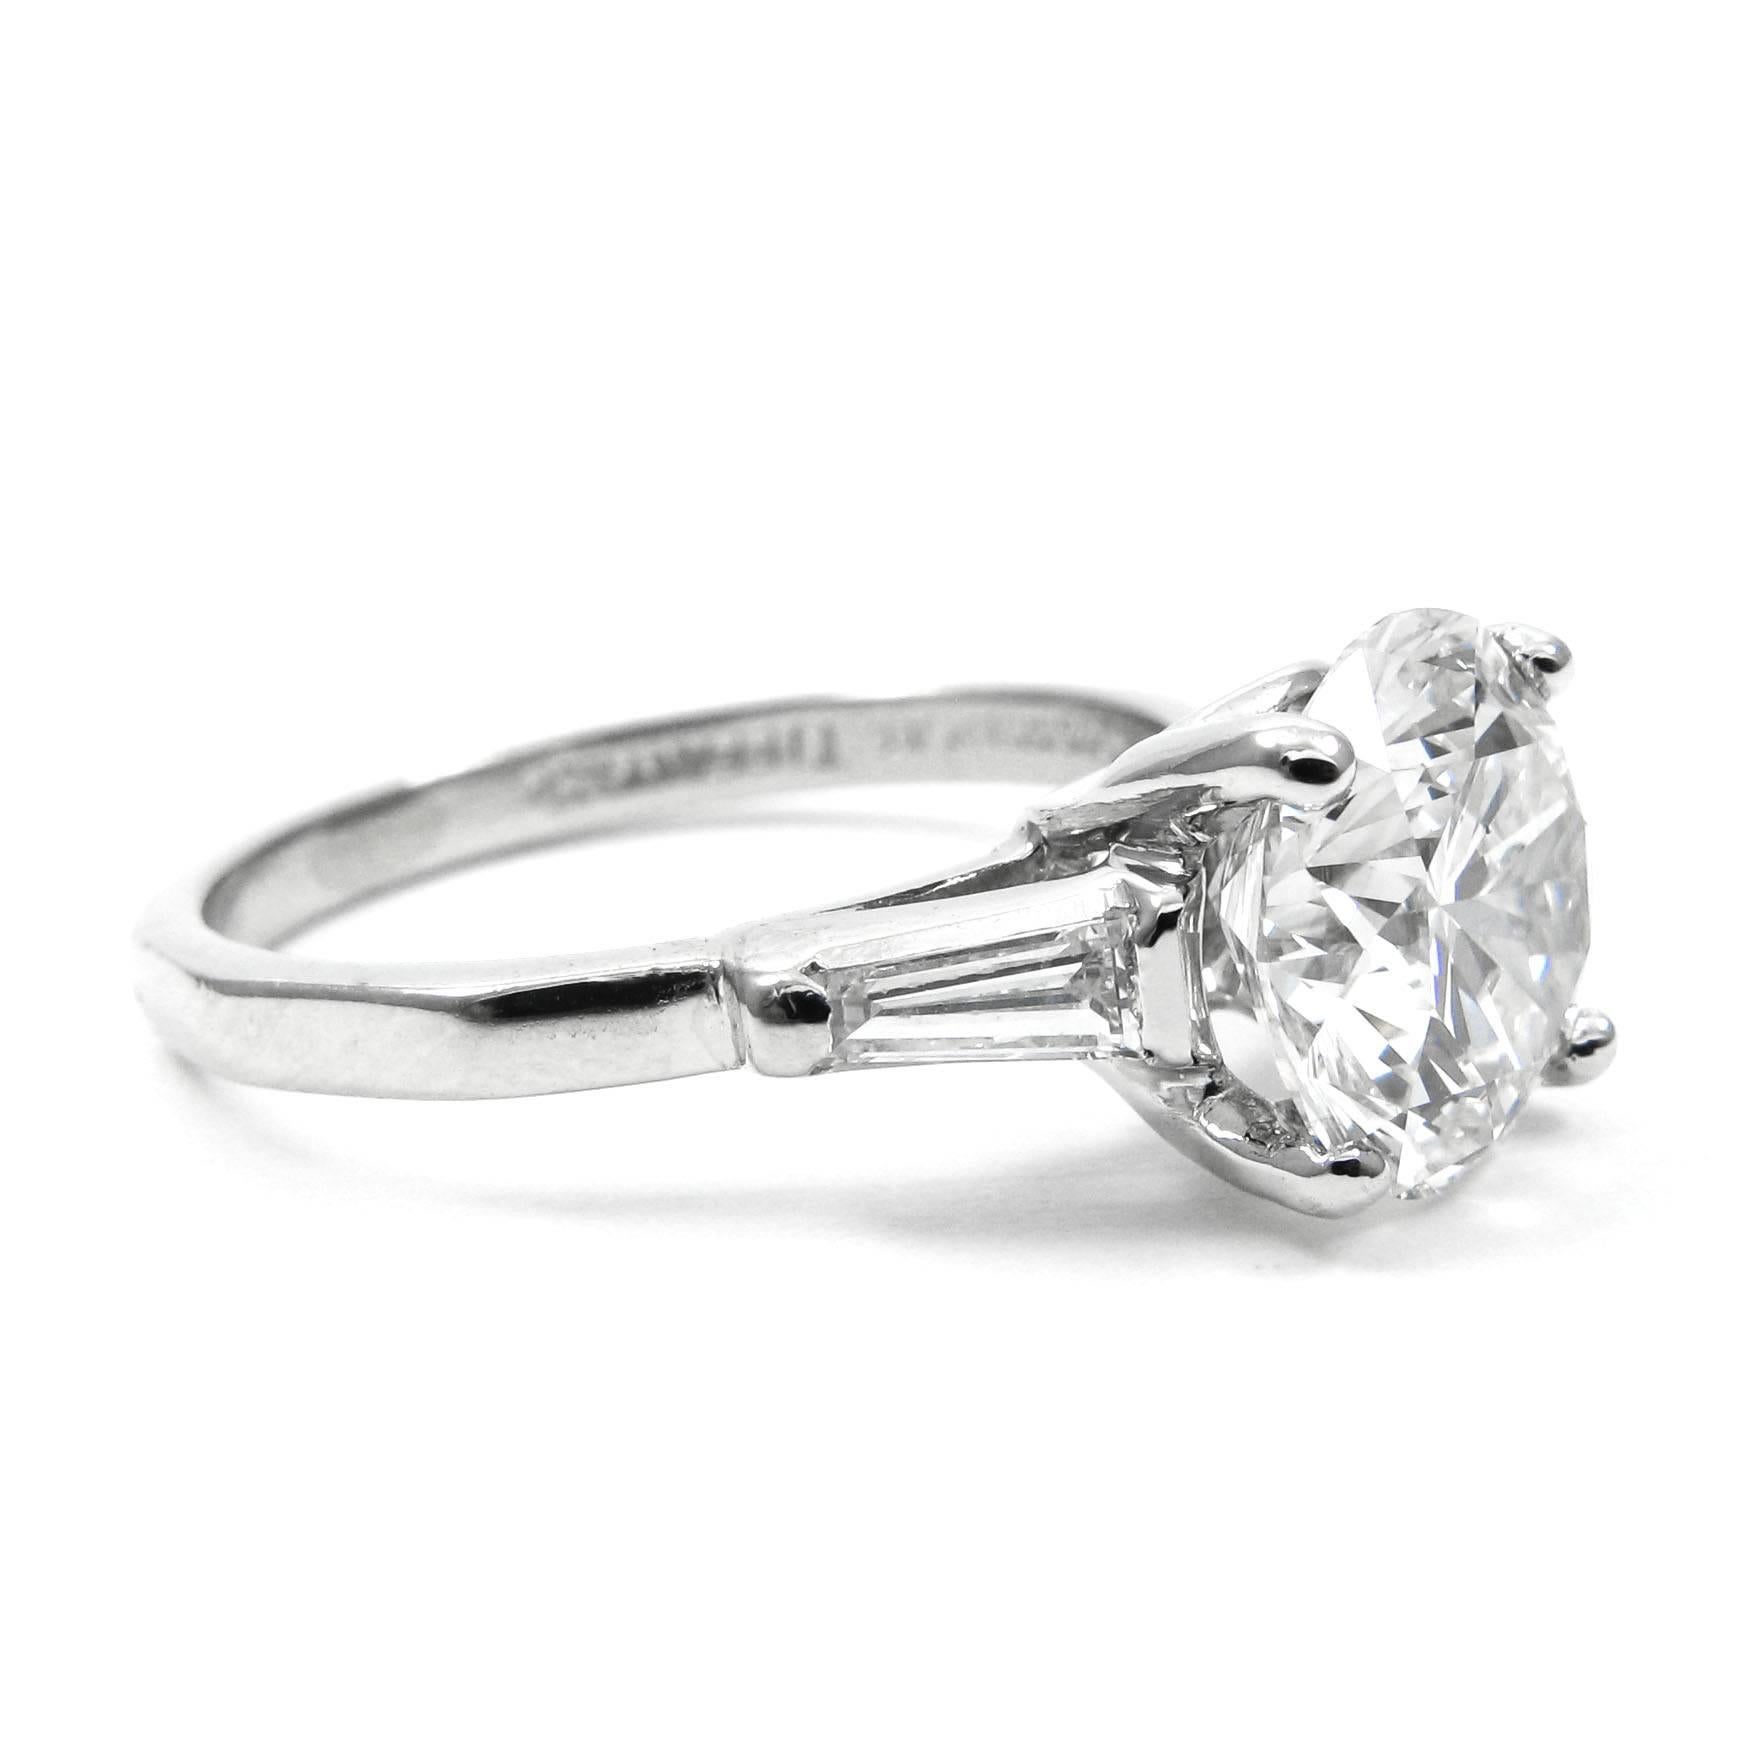 2.5 carat diamond ring price tiffany